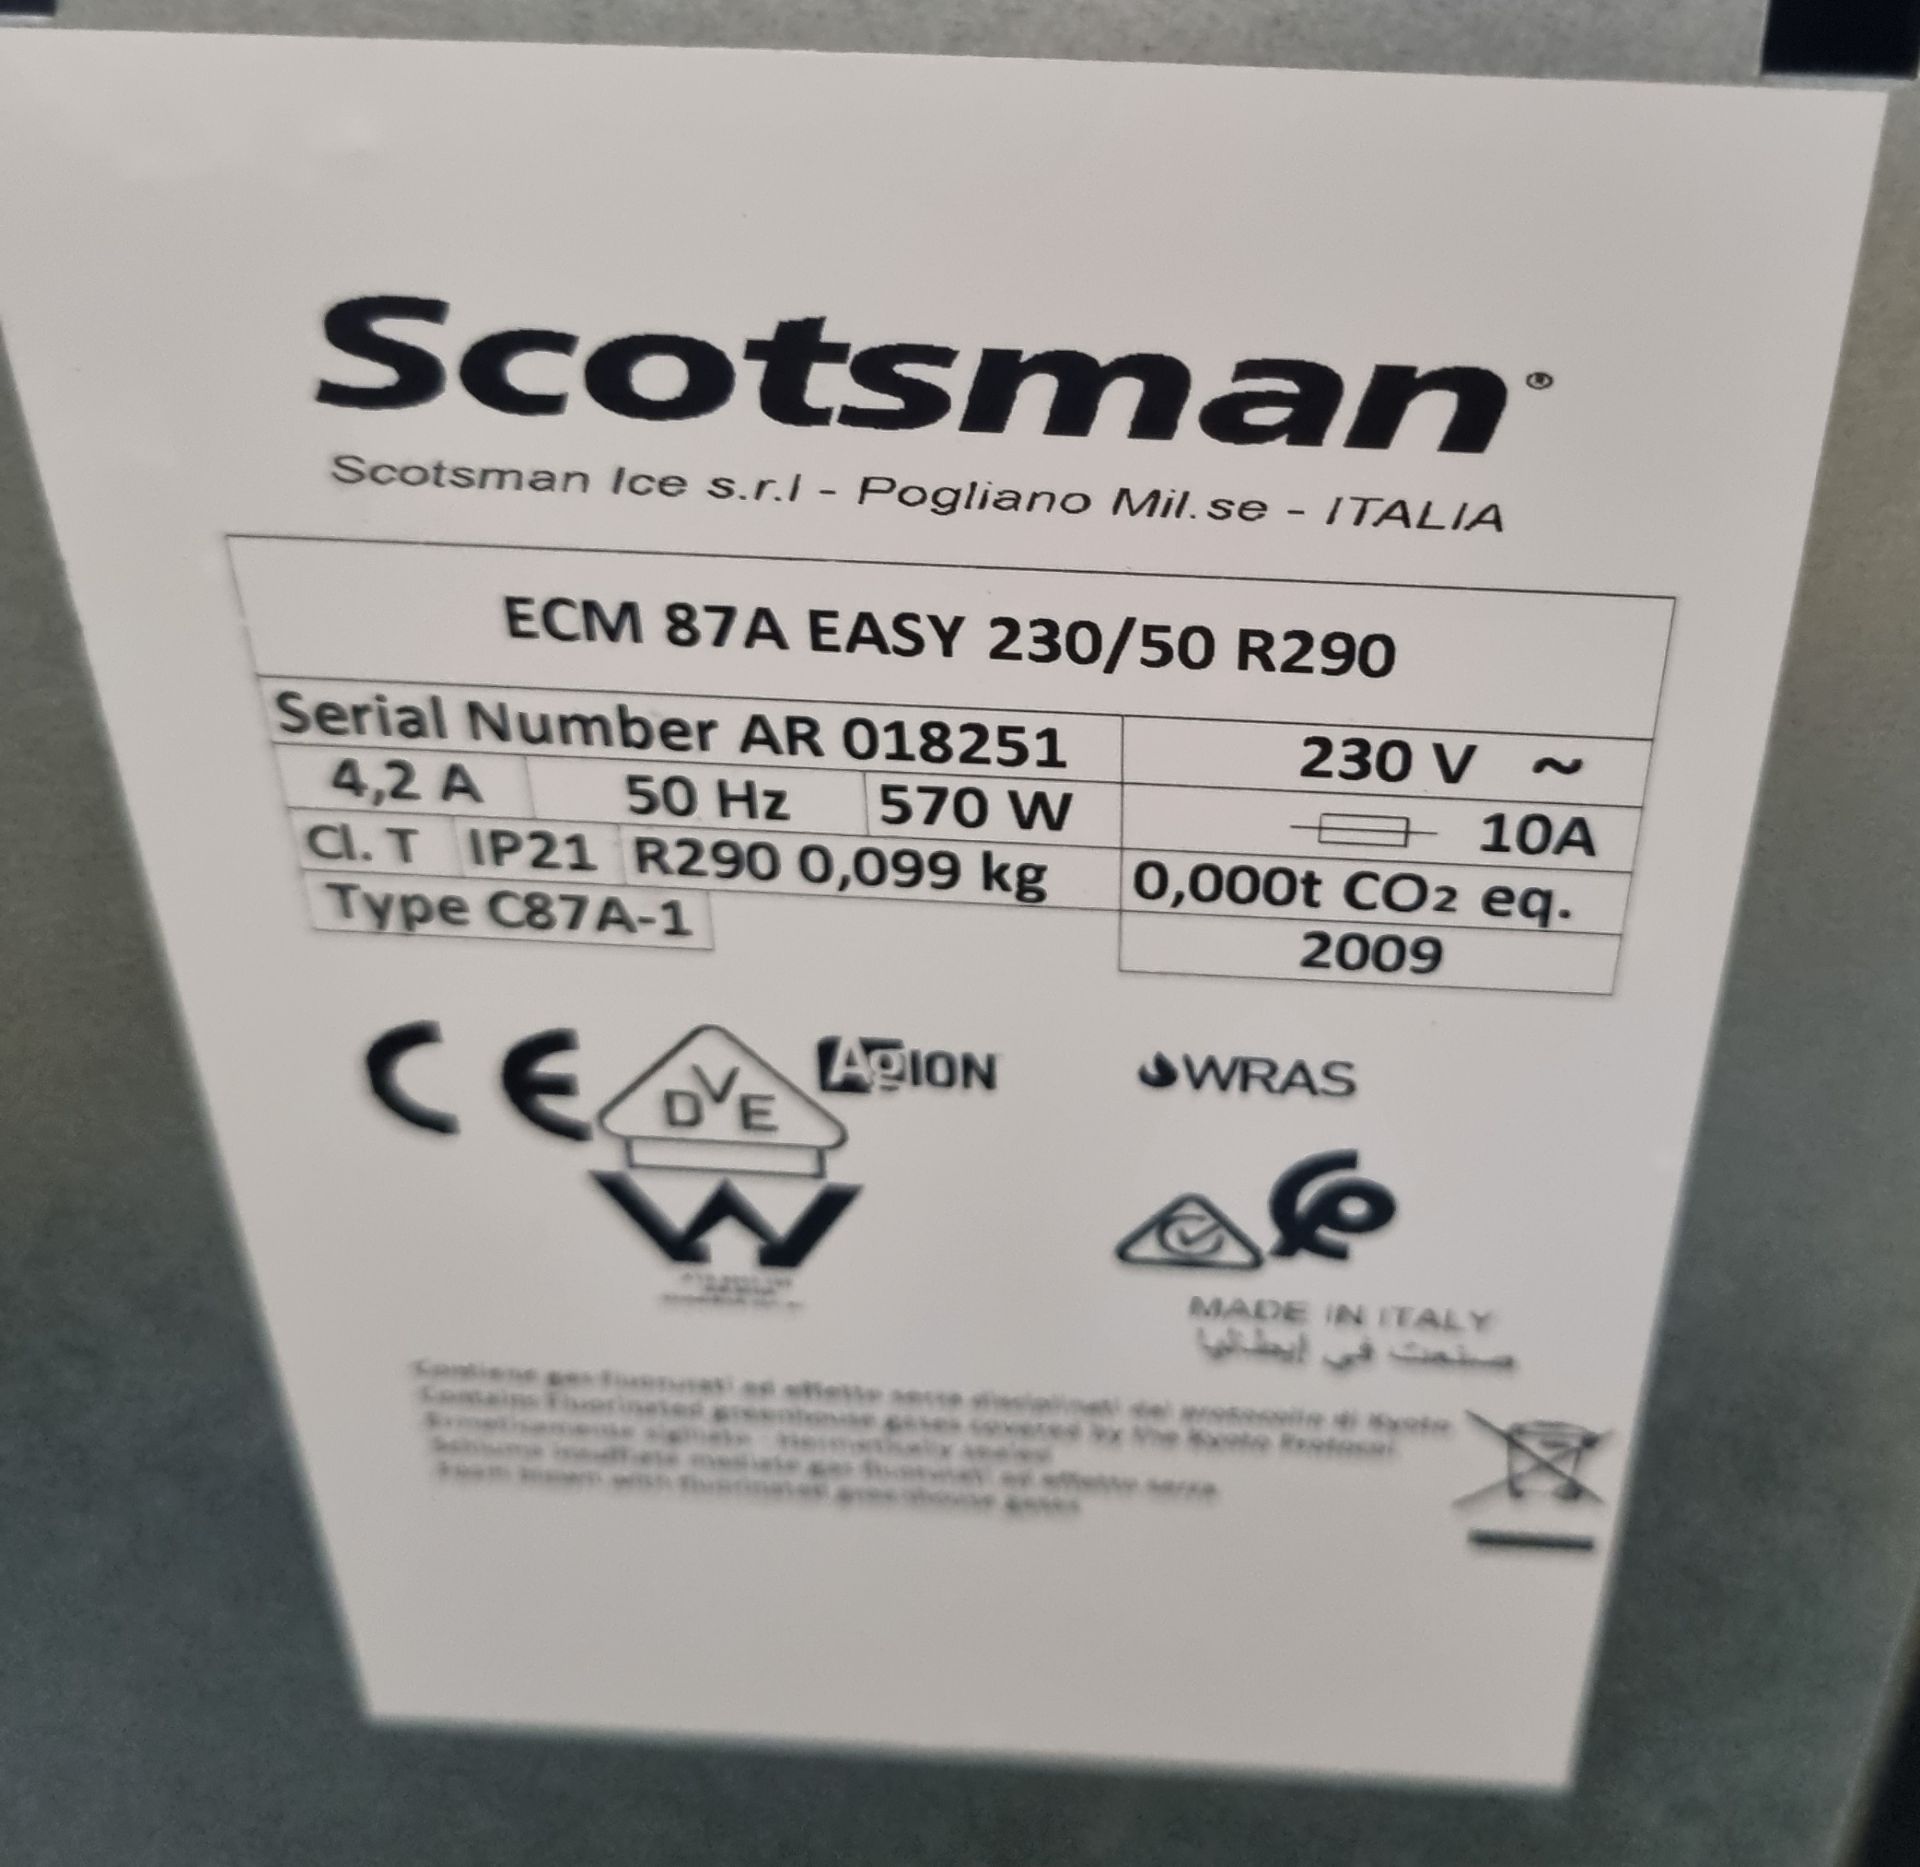 Scotsman EC 87 EcoX ice machine - 540mm W - Image 4 of 4